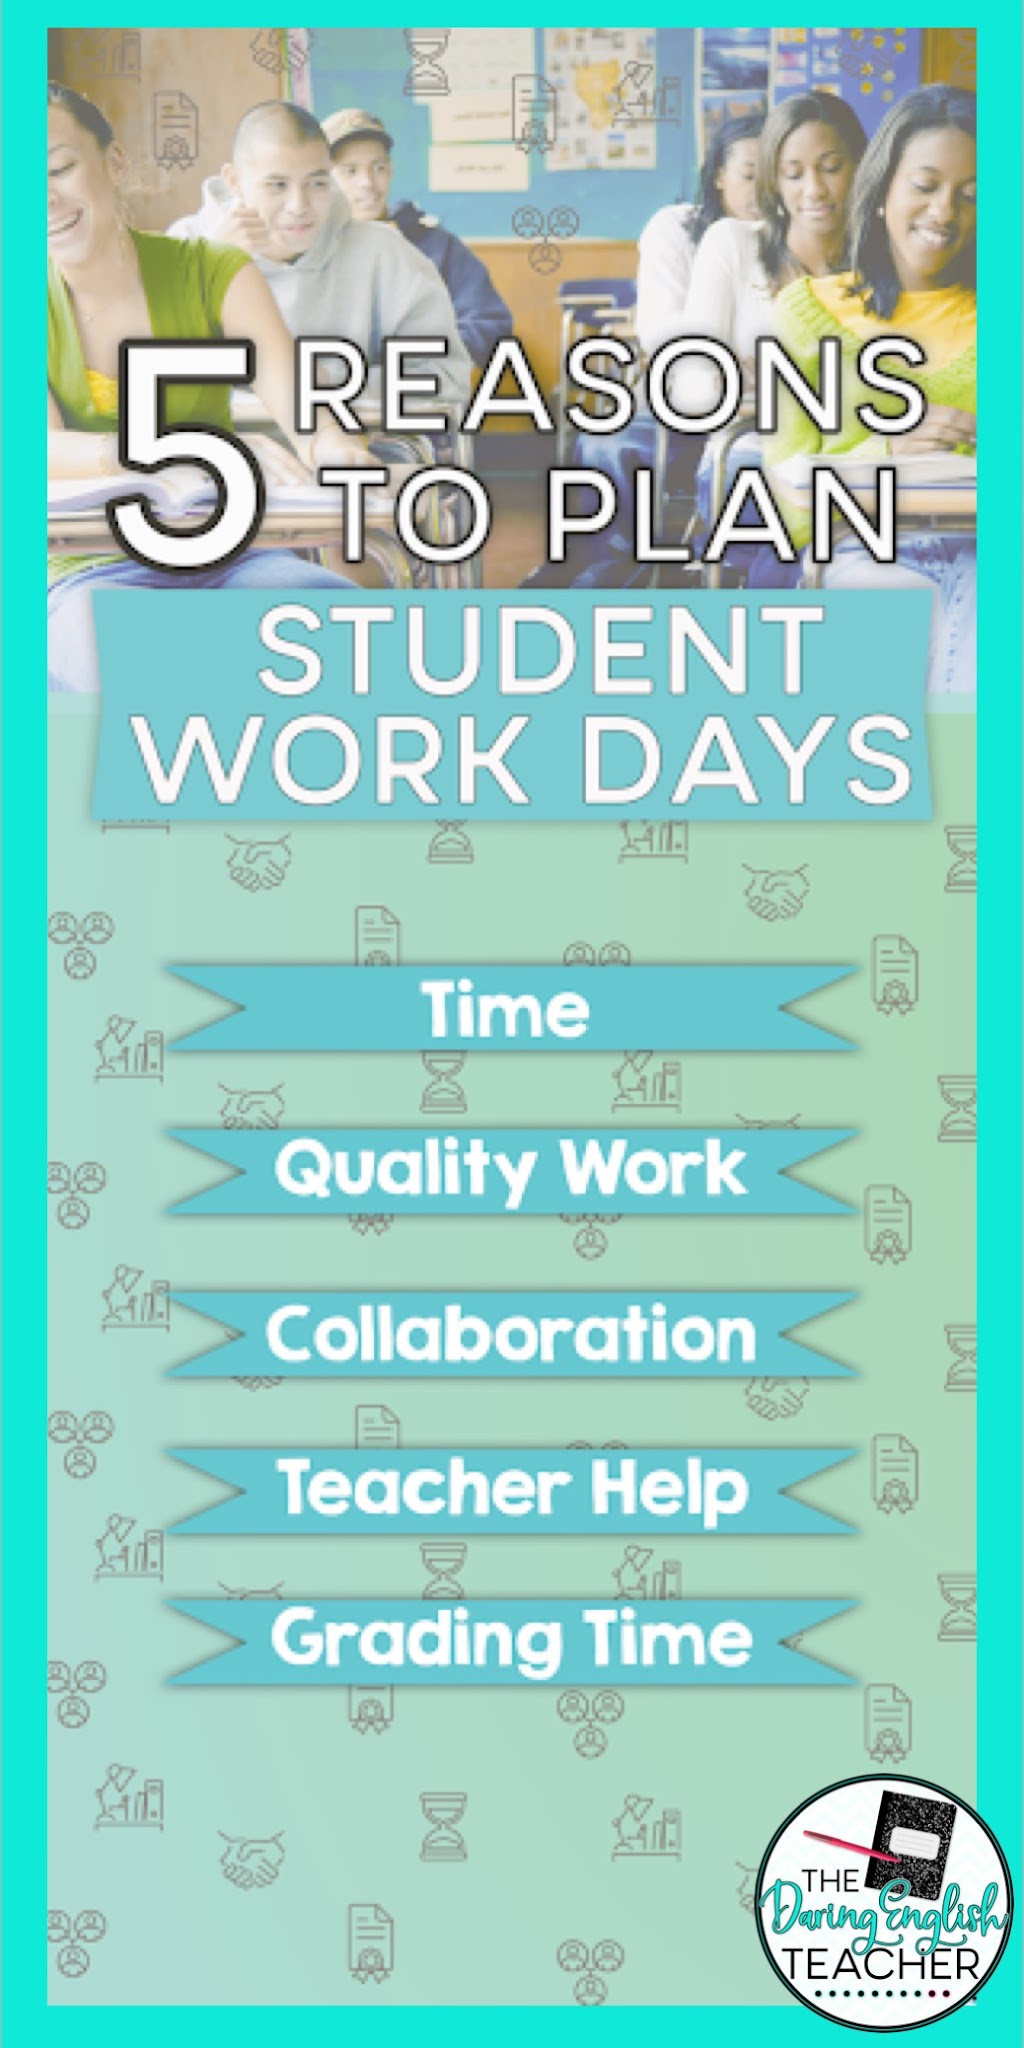 5 Reasons to Plan Student Work Days